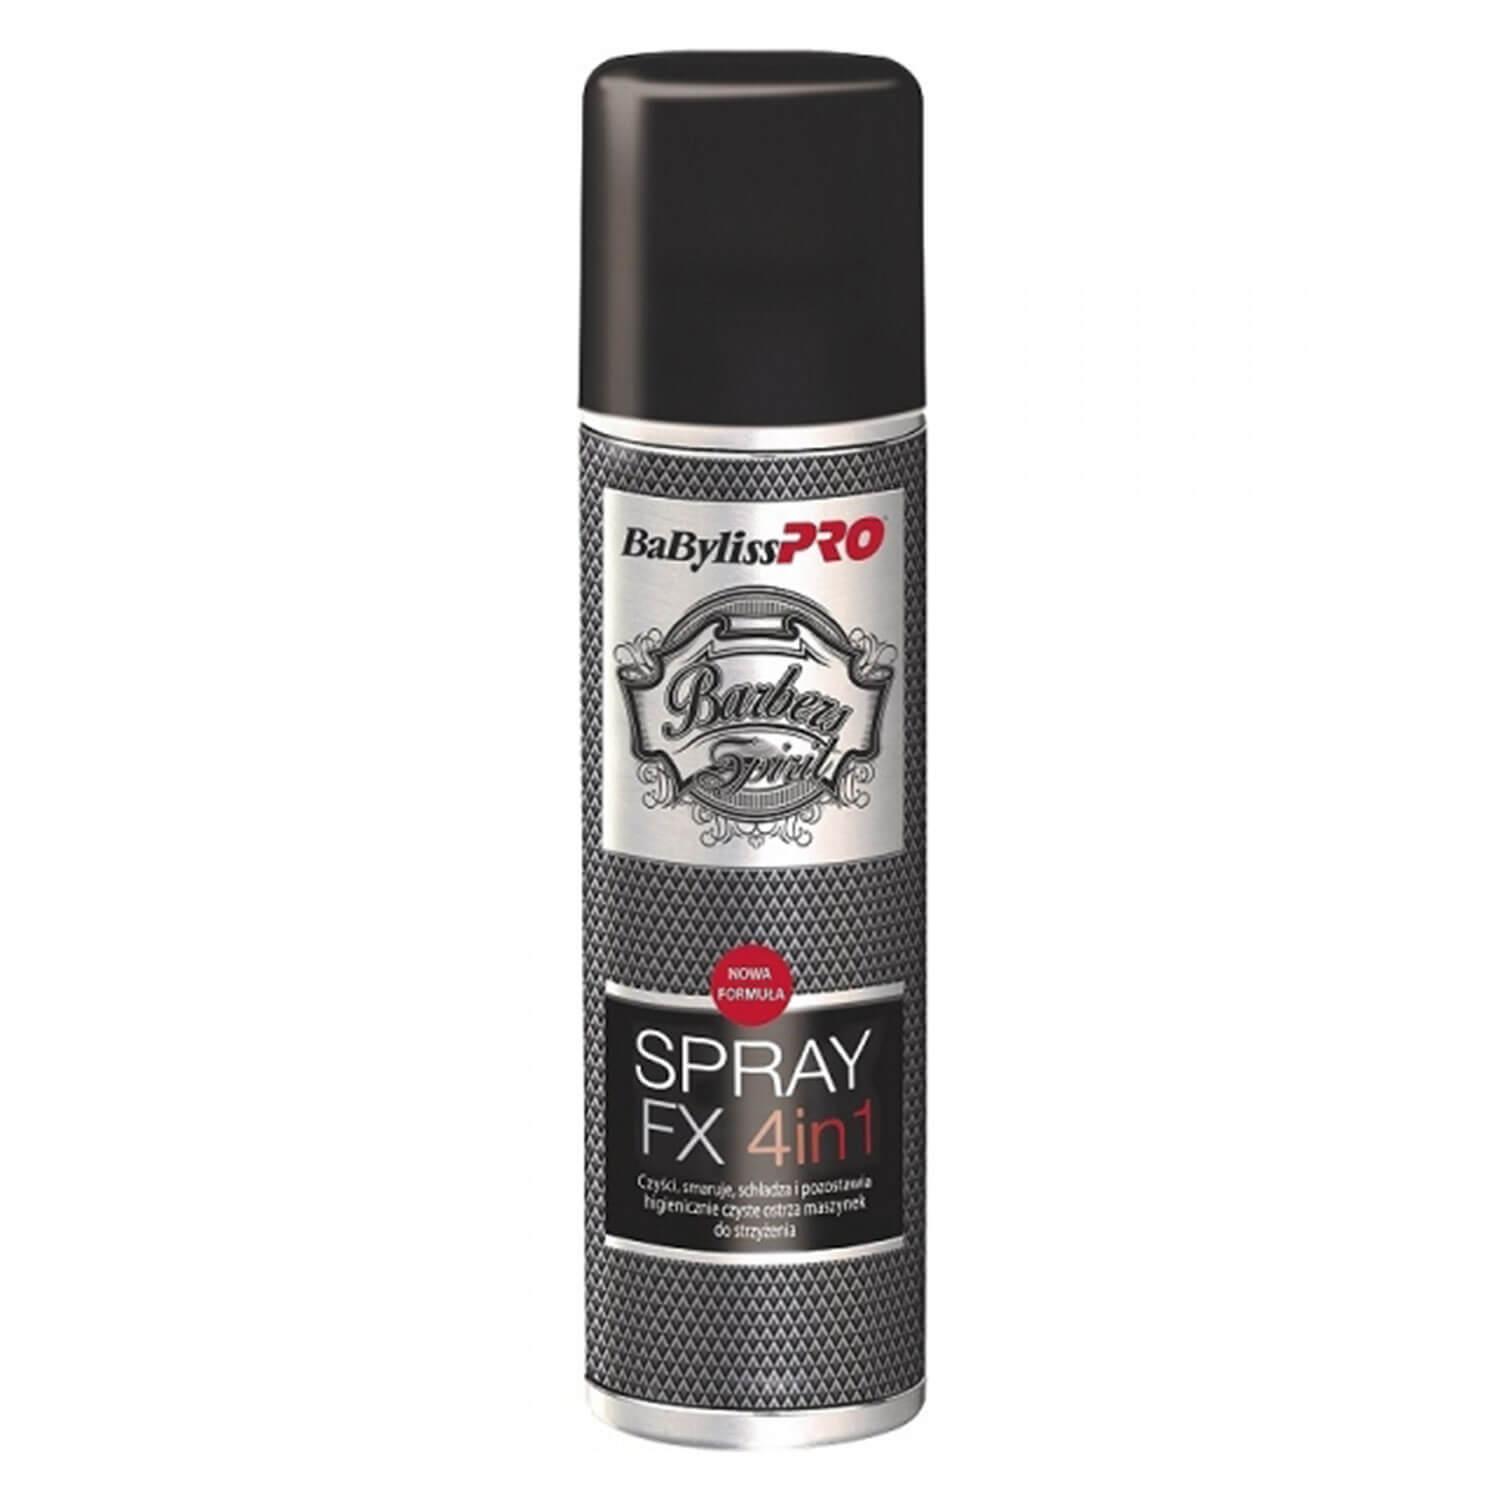 BaByliss Pro - Spray FX 4in1 FX040290